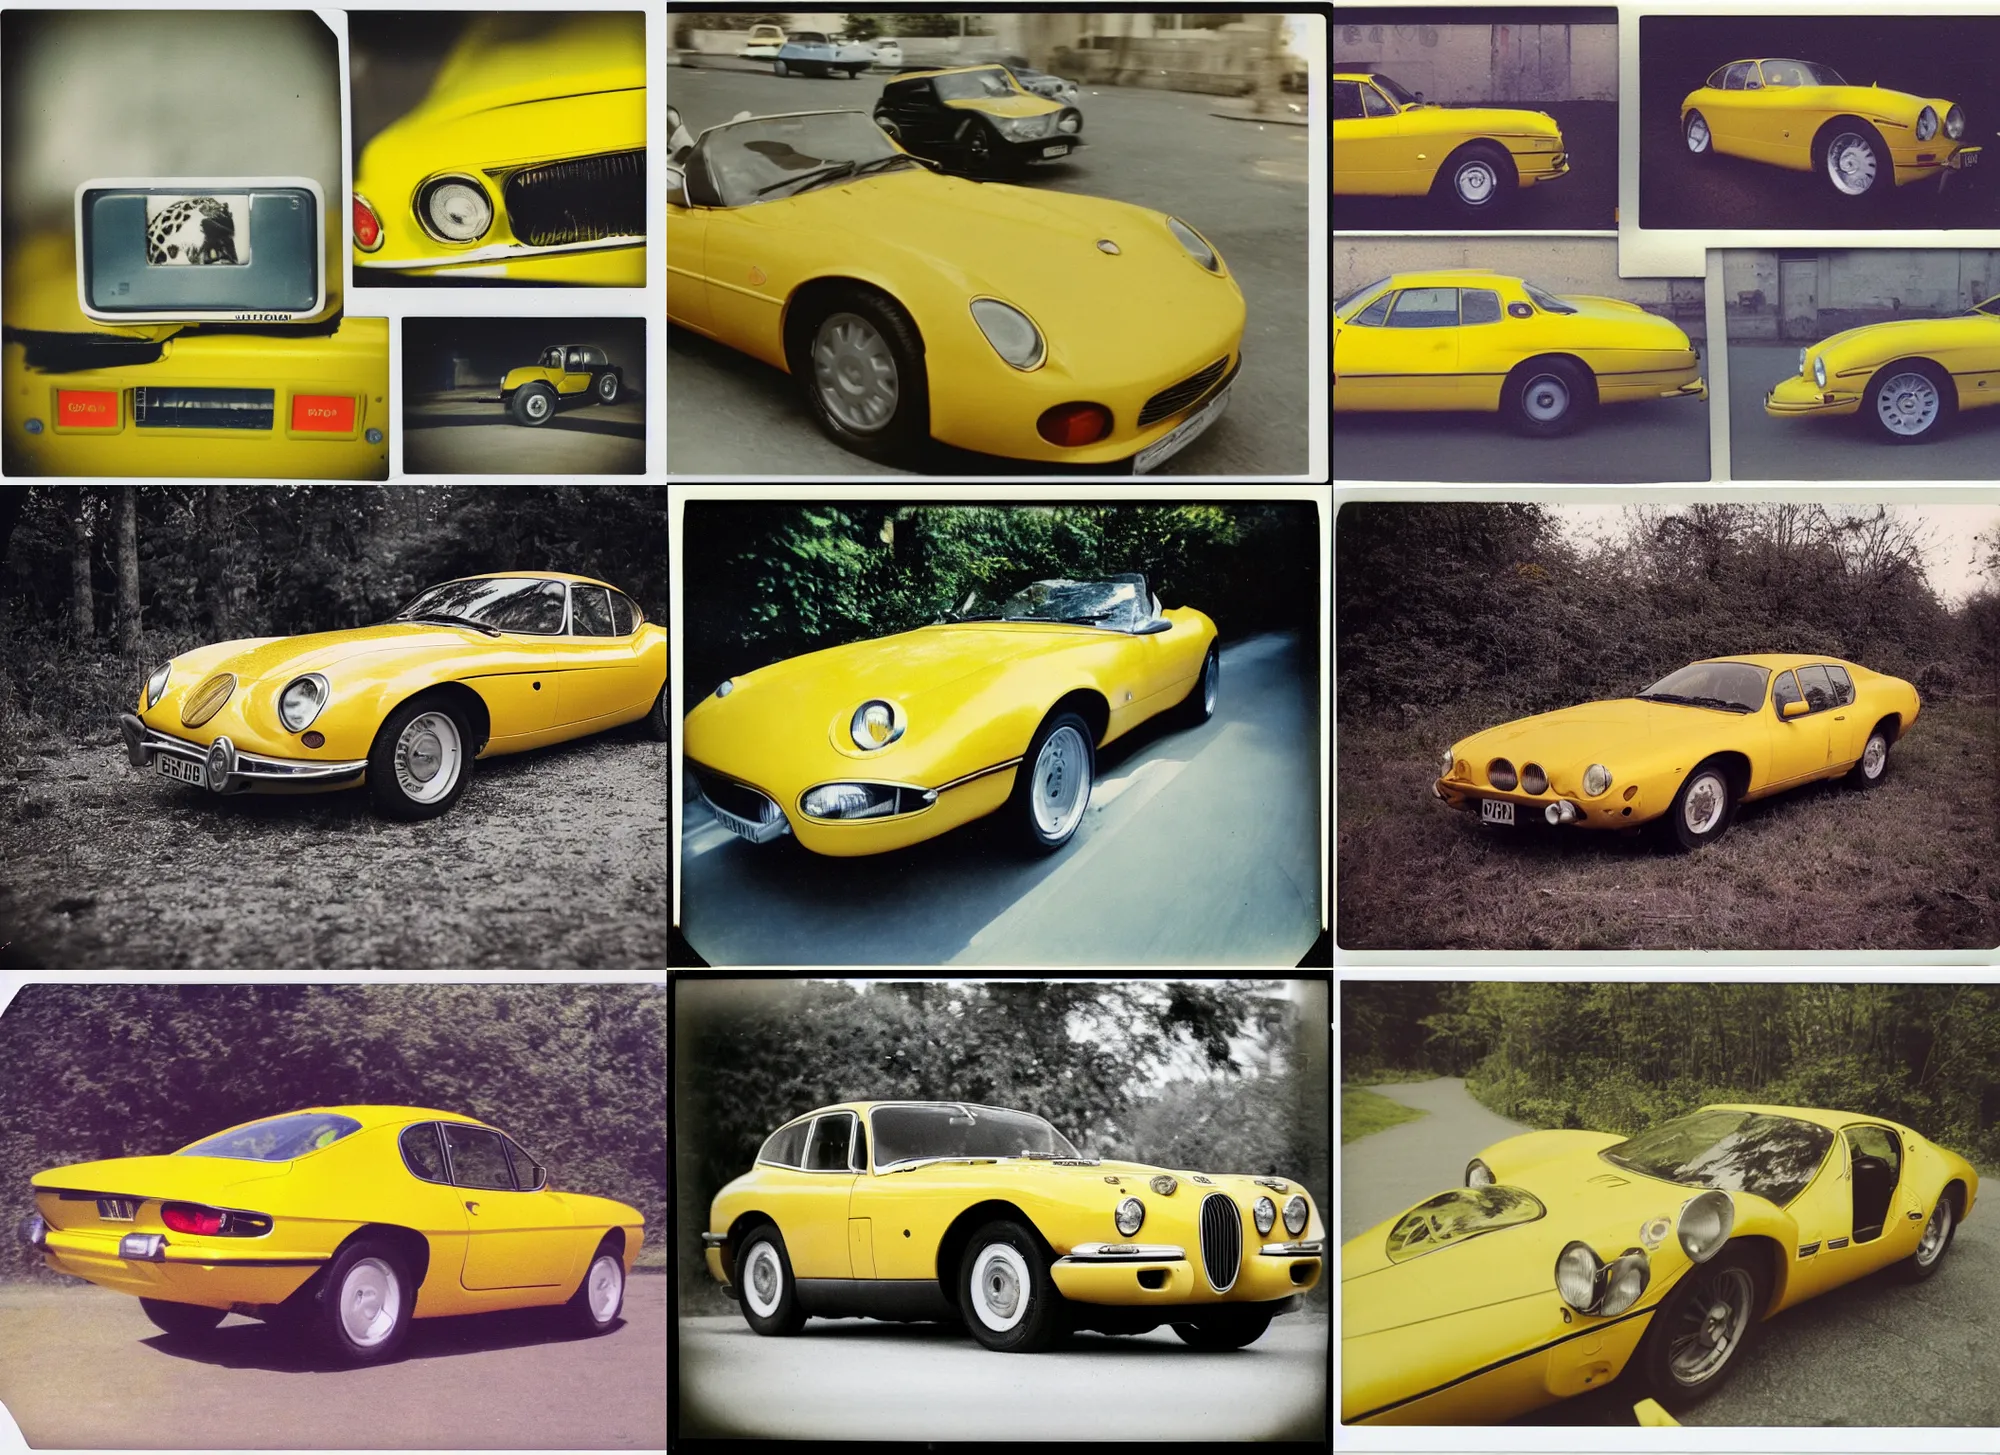 Prompt: old polaroid shots of a yellow jaguar car